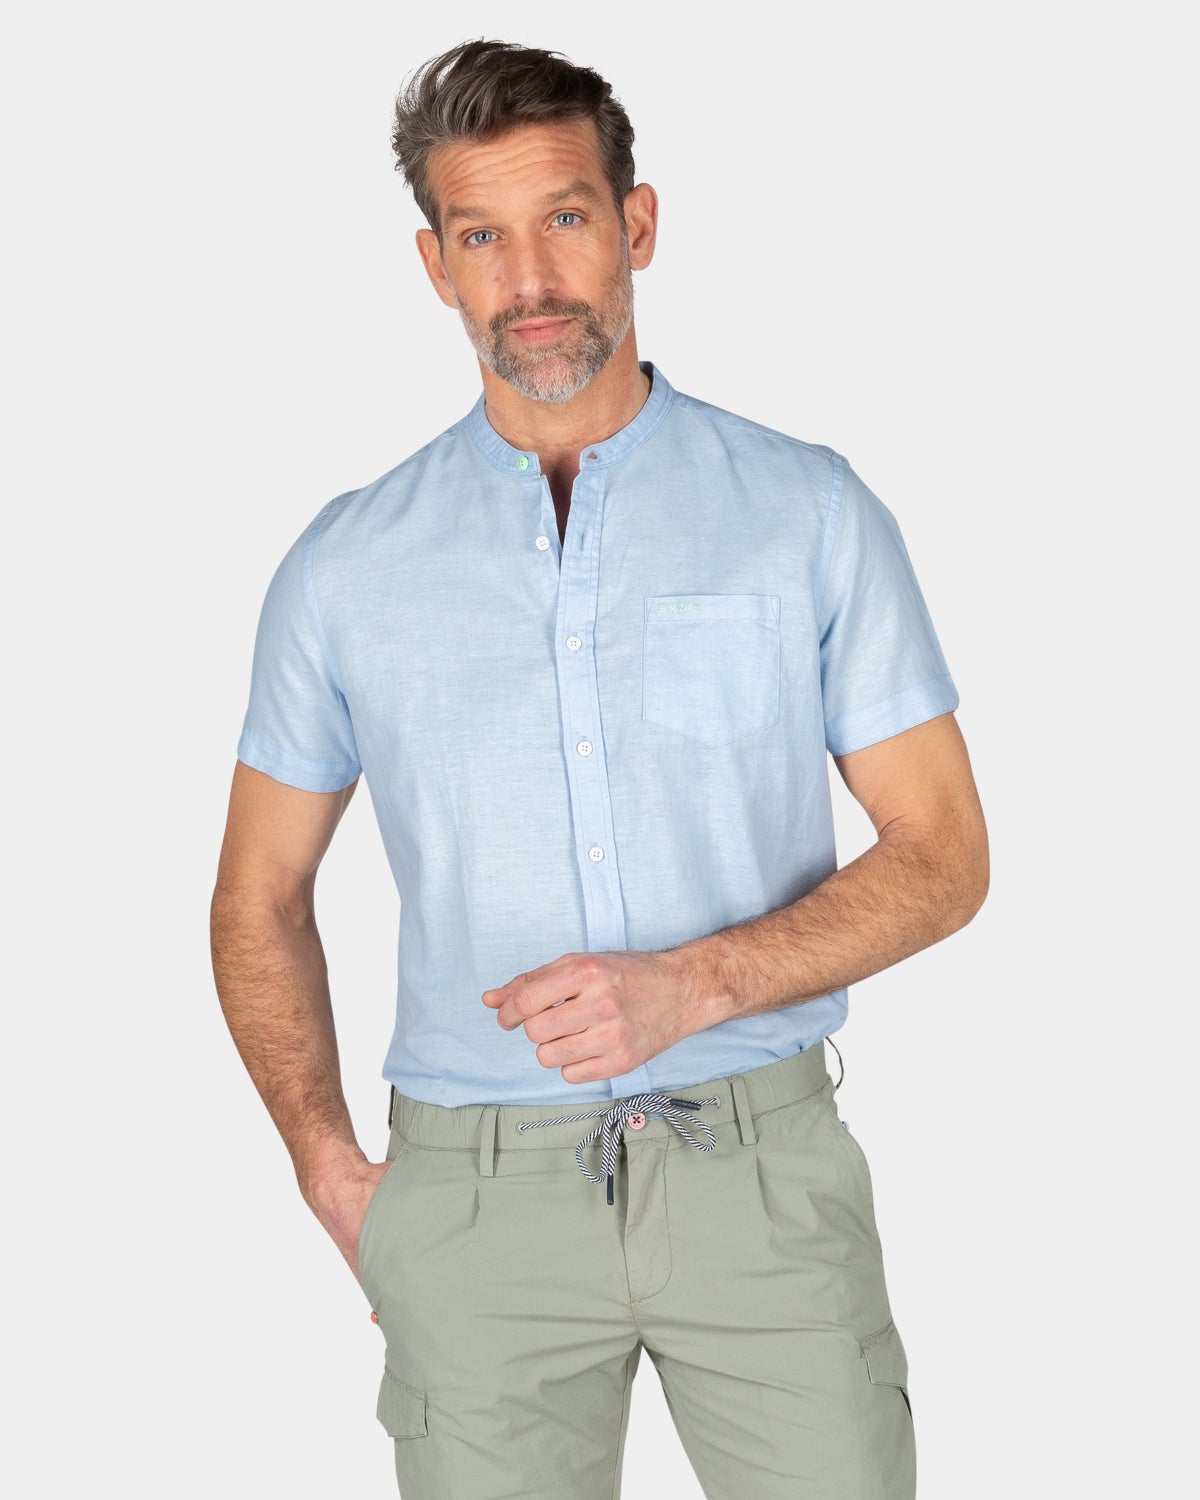 Collarless shirt with short sleeves - Rhythm Blue